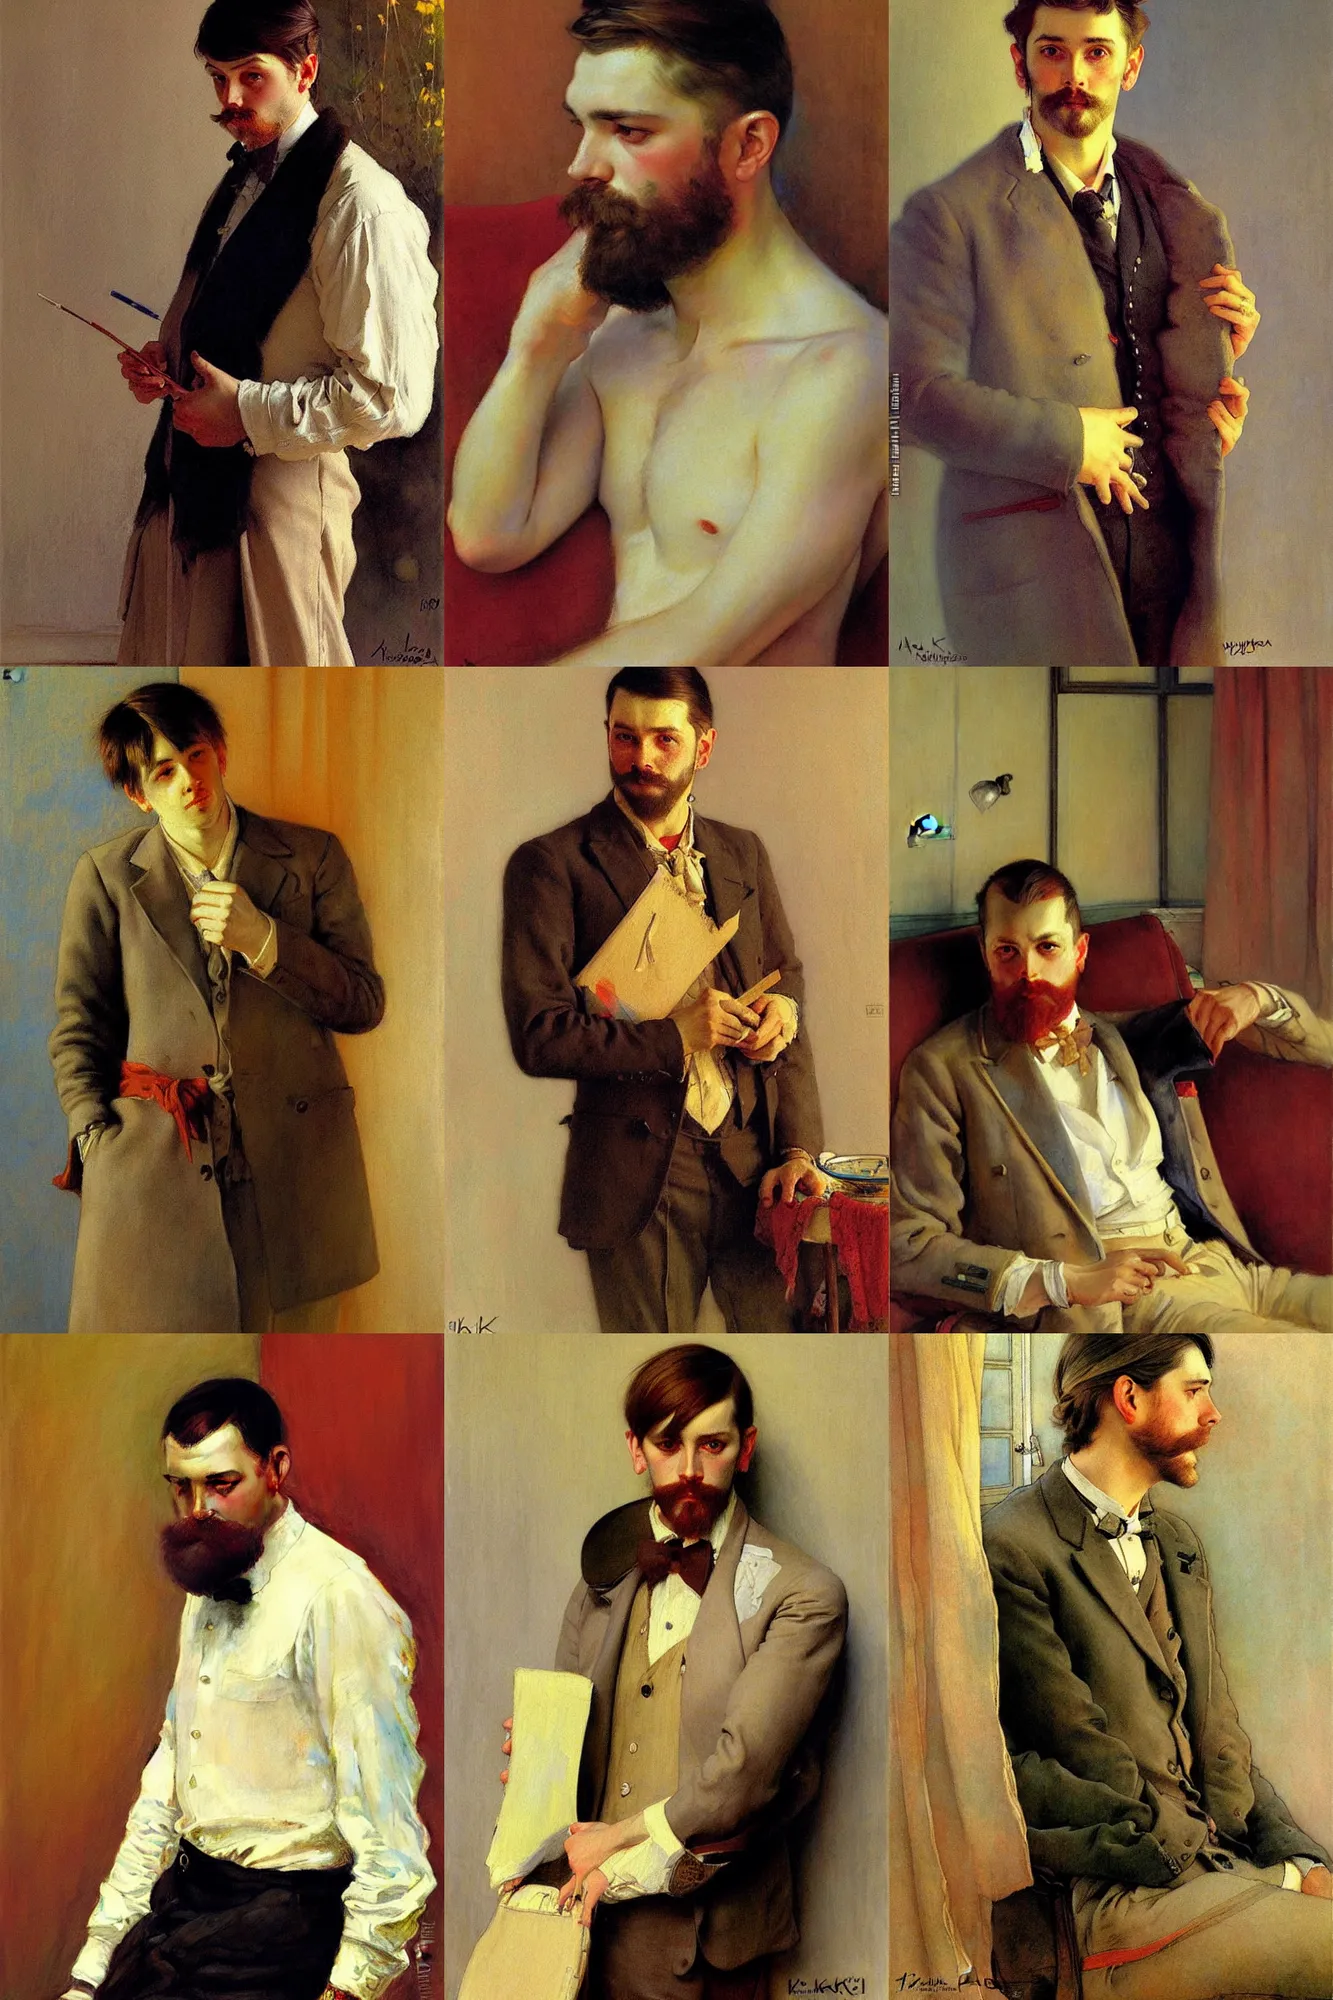 Prompt: attractive male, painting by ilya kuvshinov, carl larsson, gaston bussiere